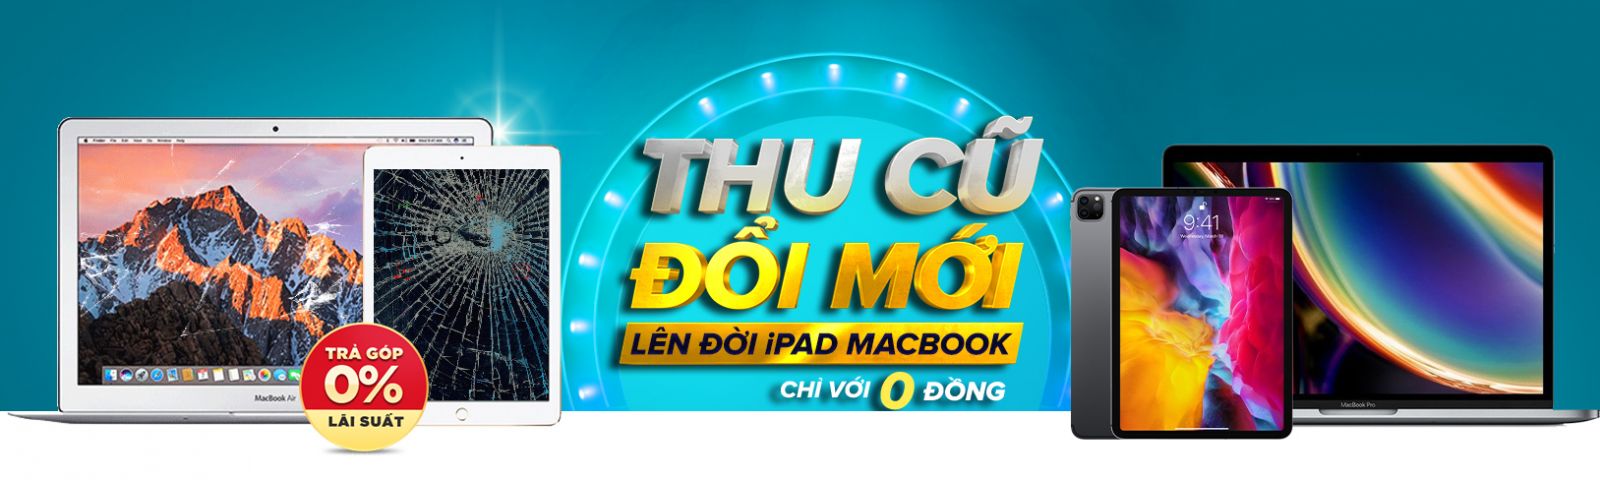 ipad-macbook-thu-cu-applenewchinhhang